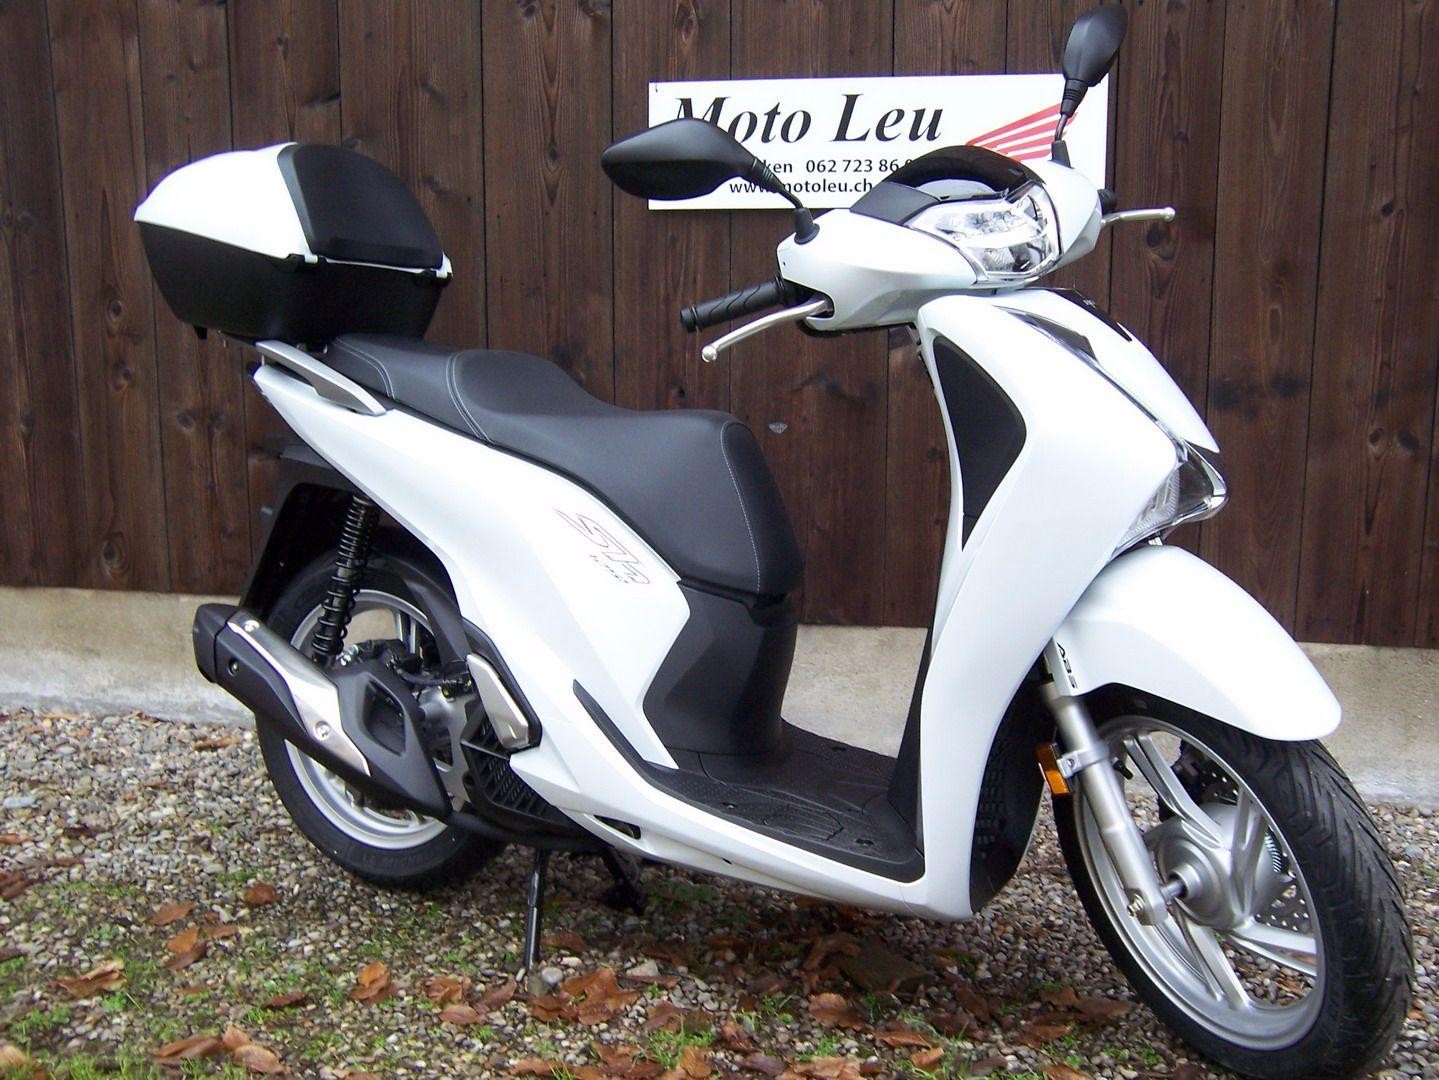 Buy Motorbike New Vehicle Bike Honda Sh 125 Ad Abs Moto Leu Gmbh Kolliken Id